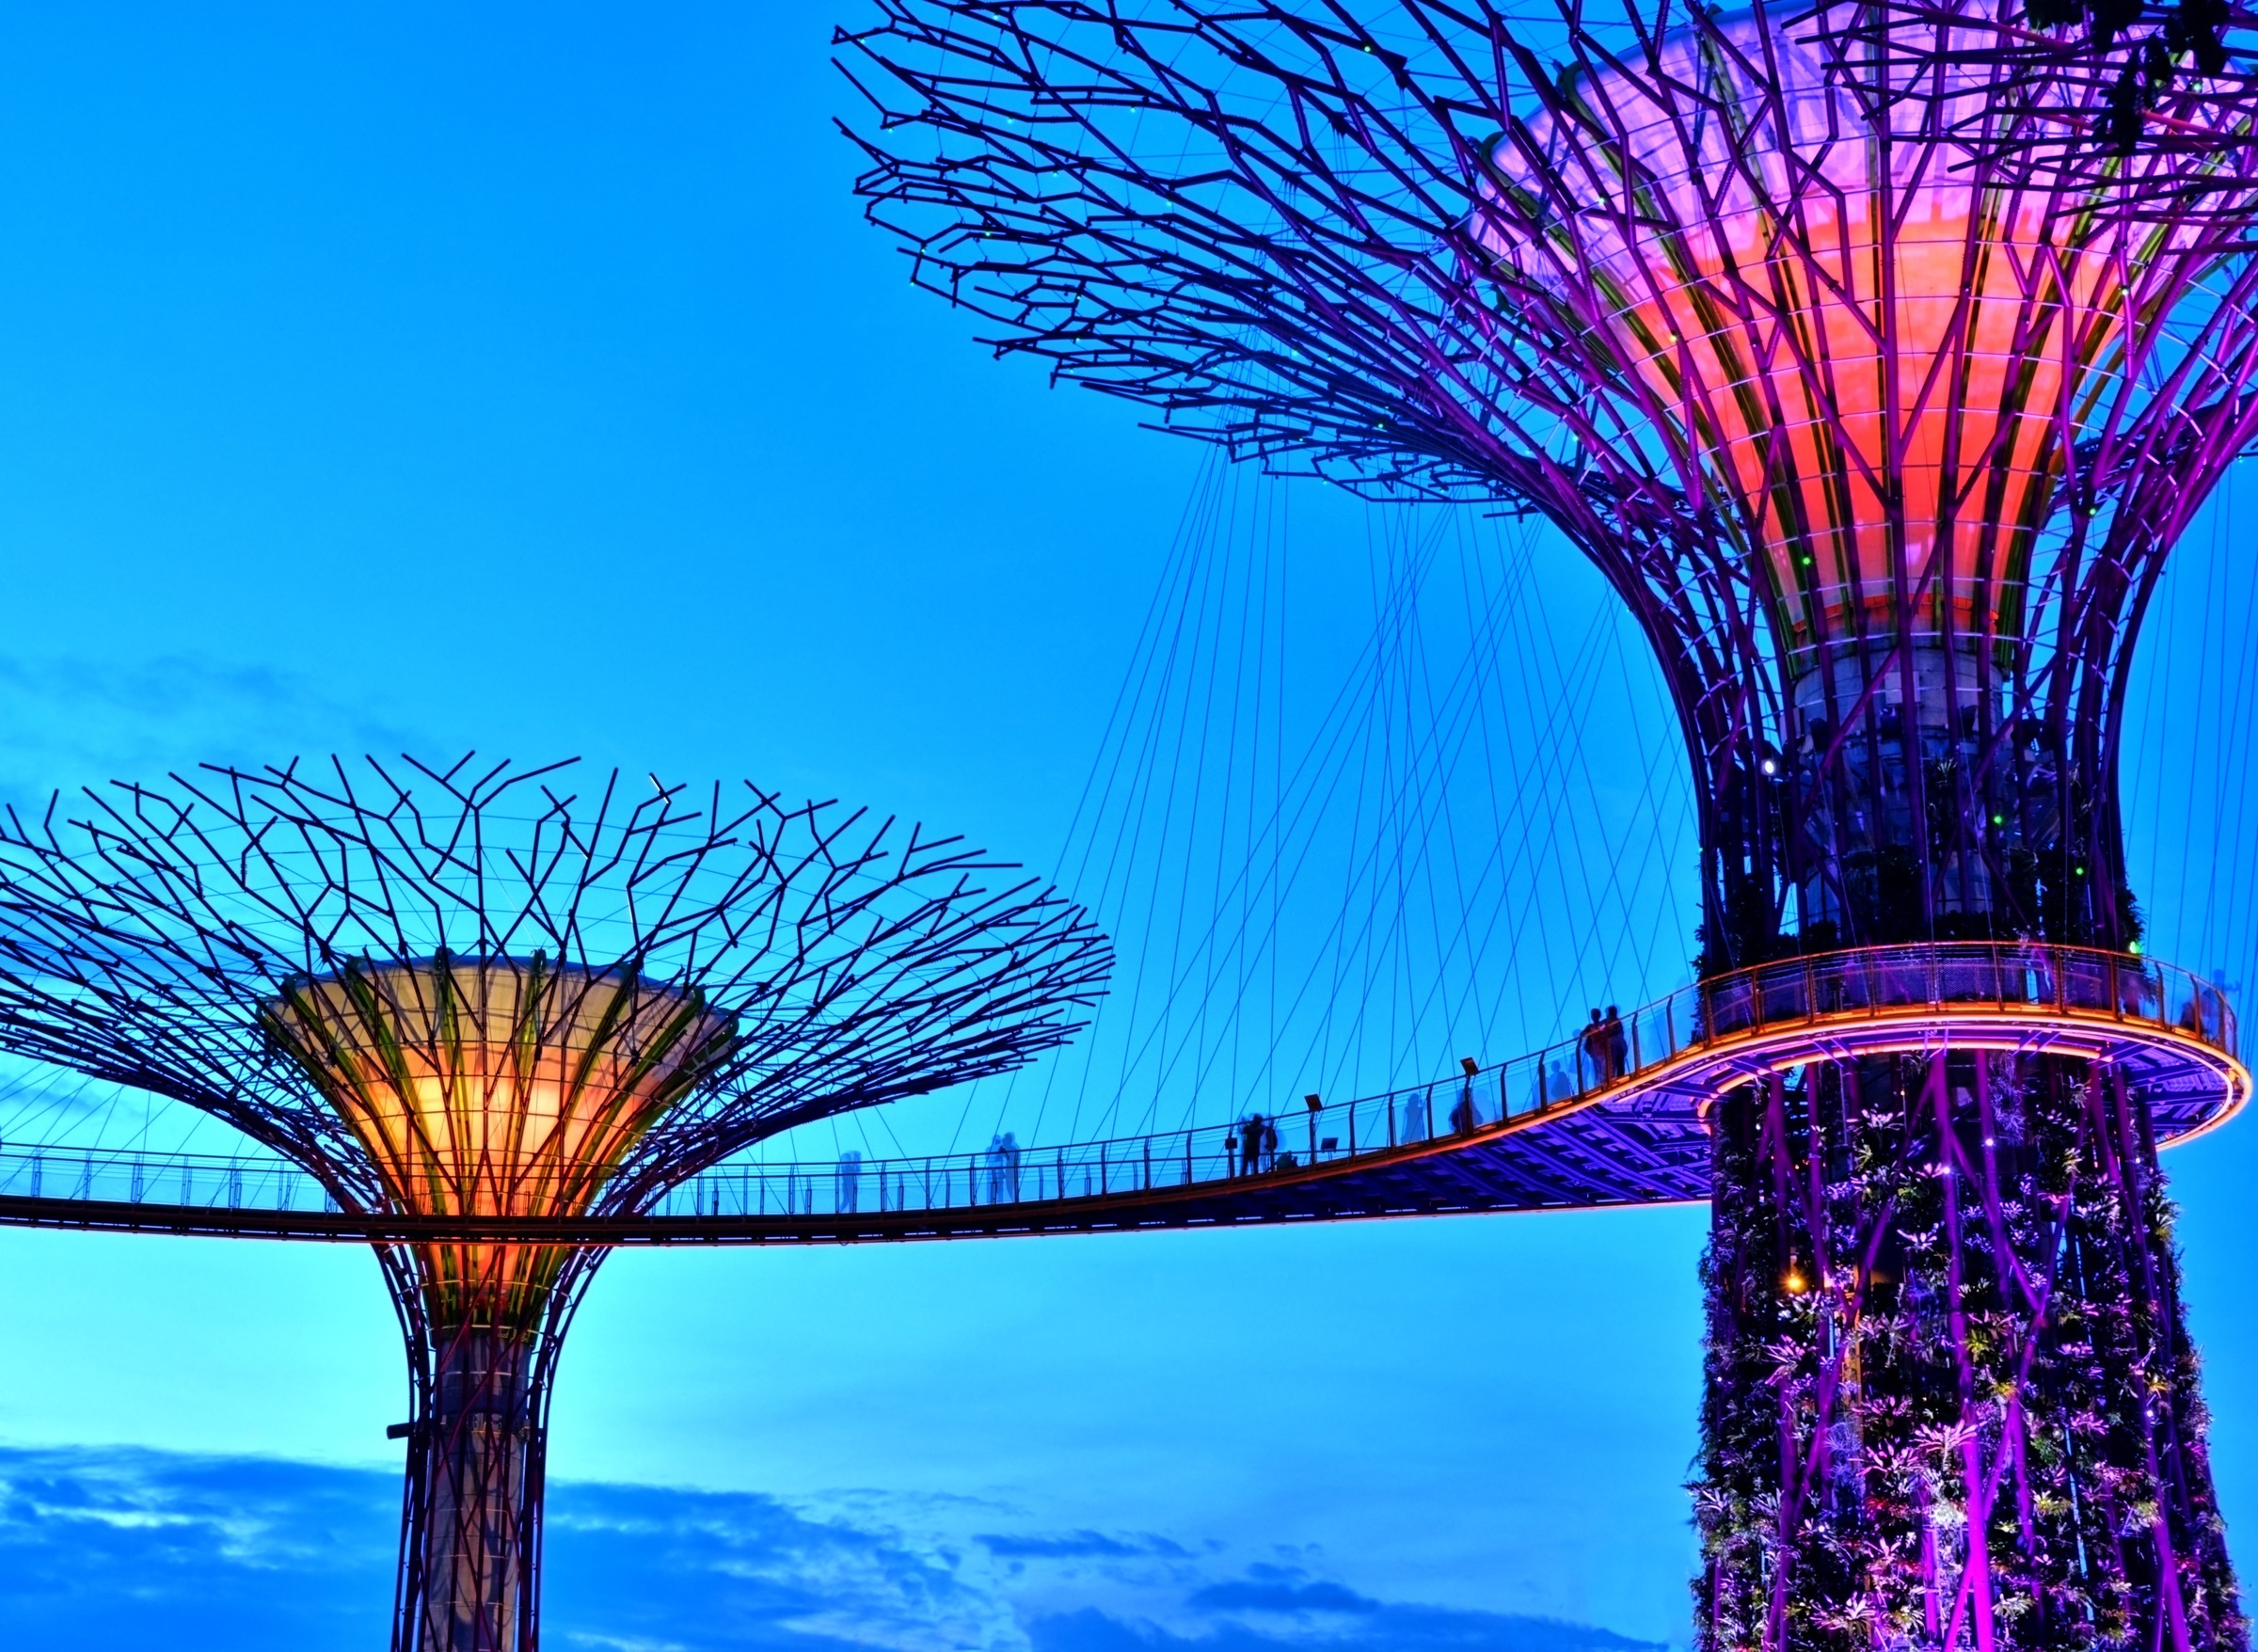 Fototapete »Singapore Bay Supertrees«